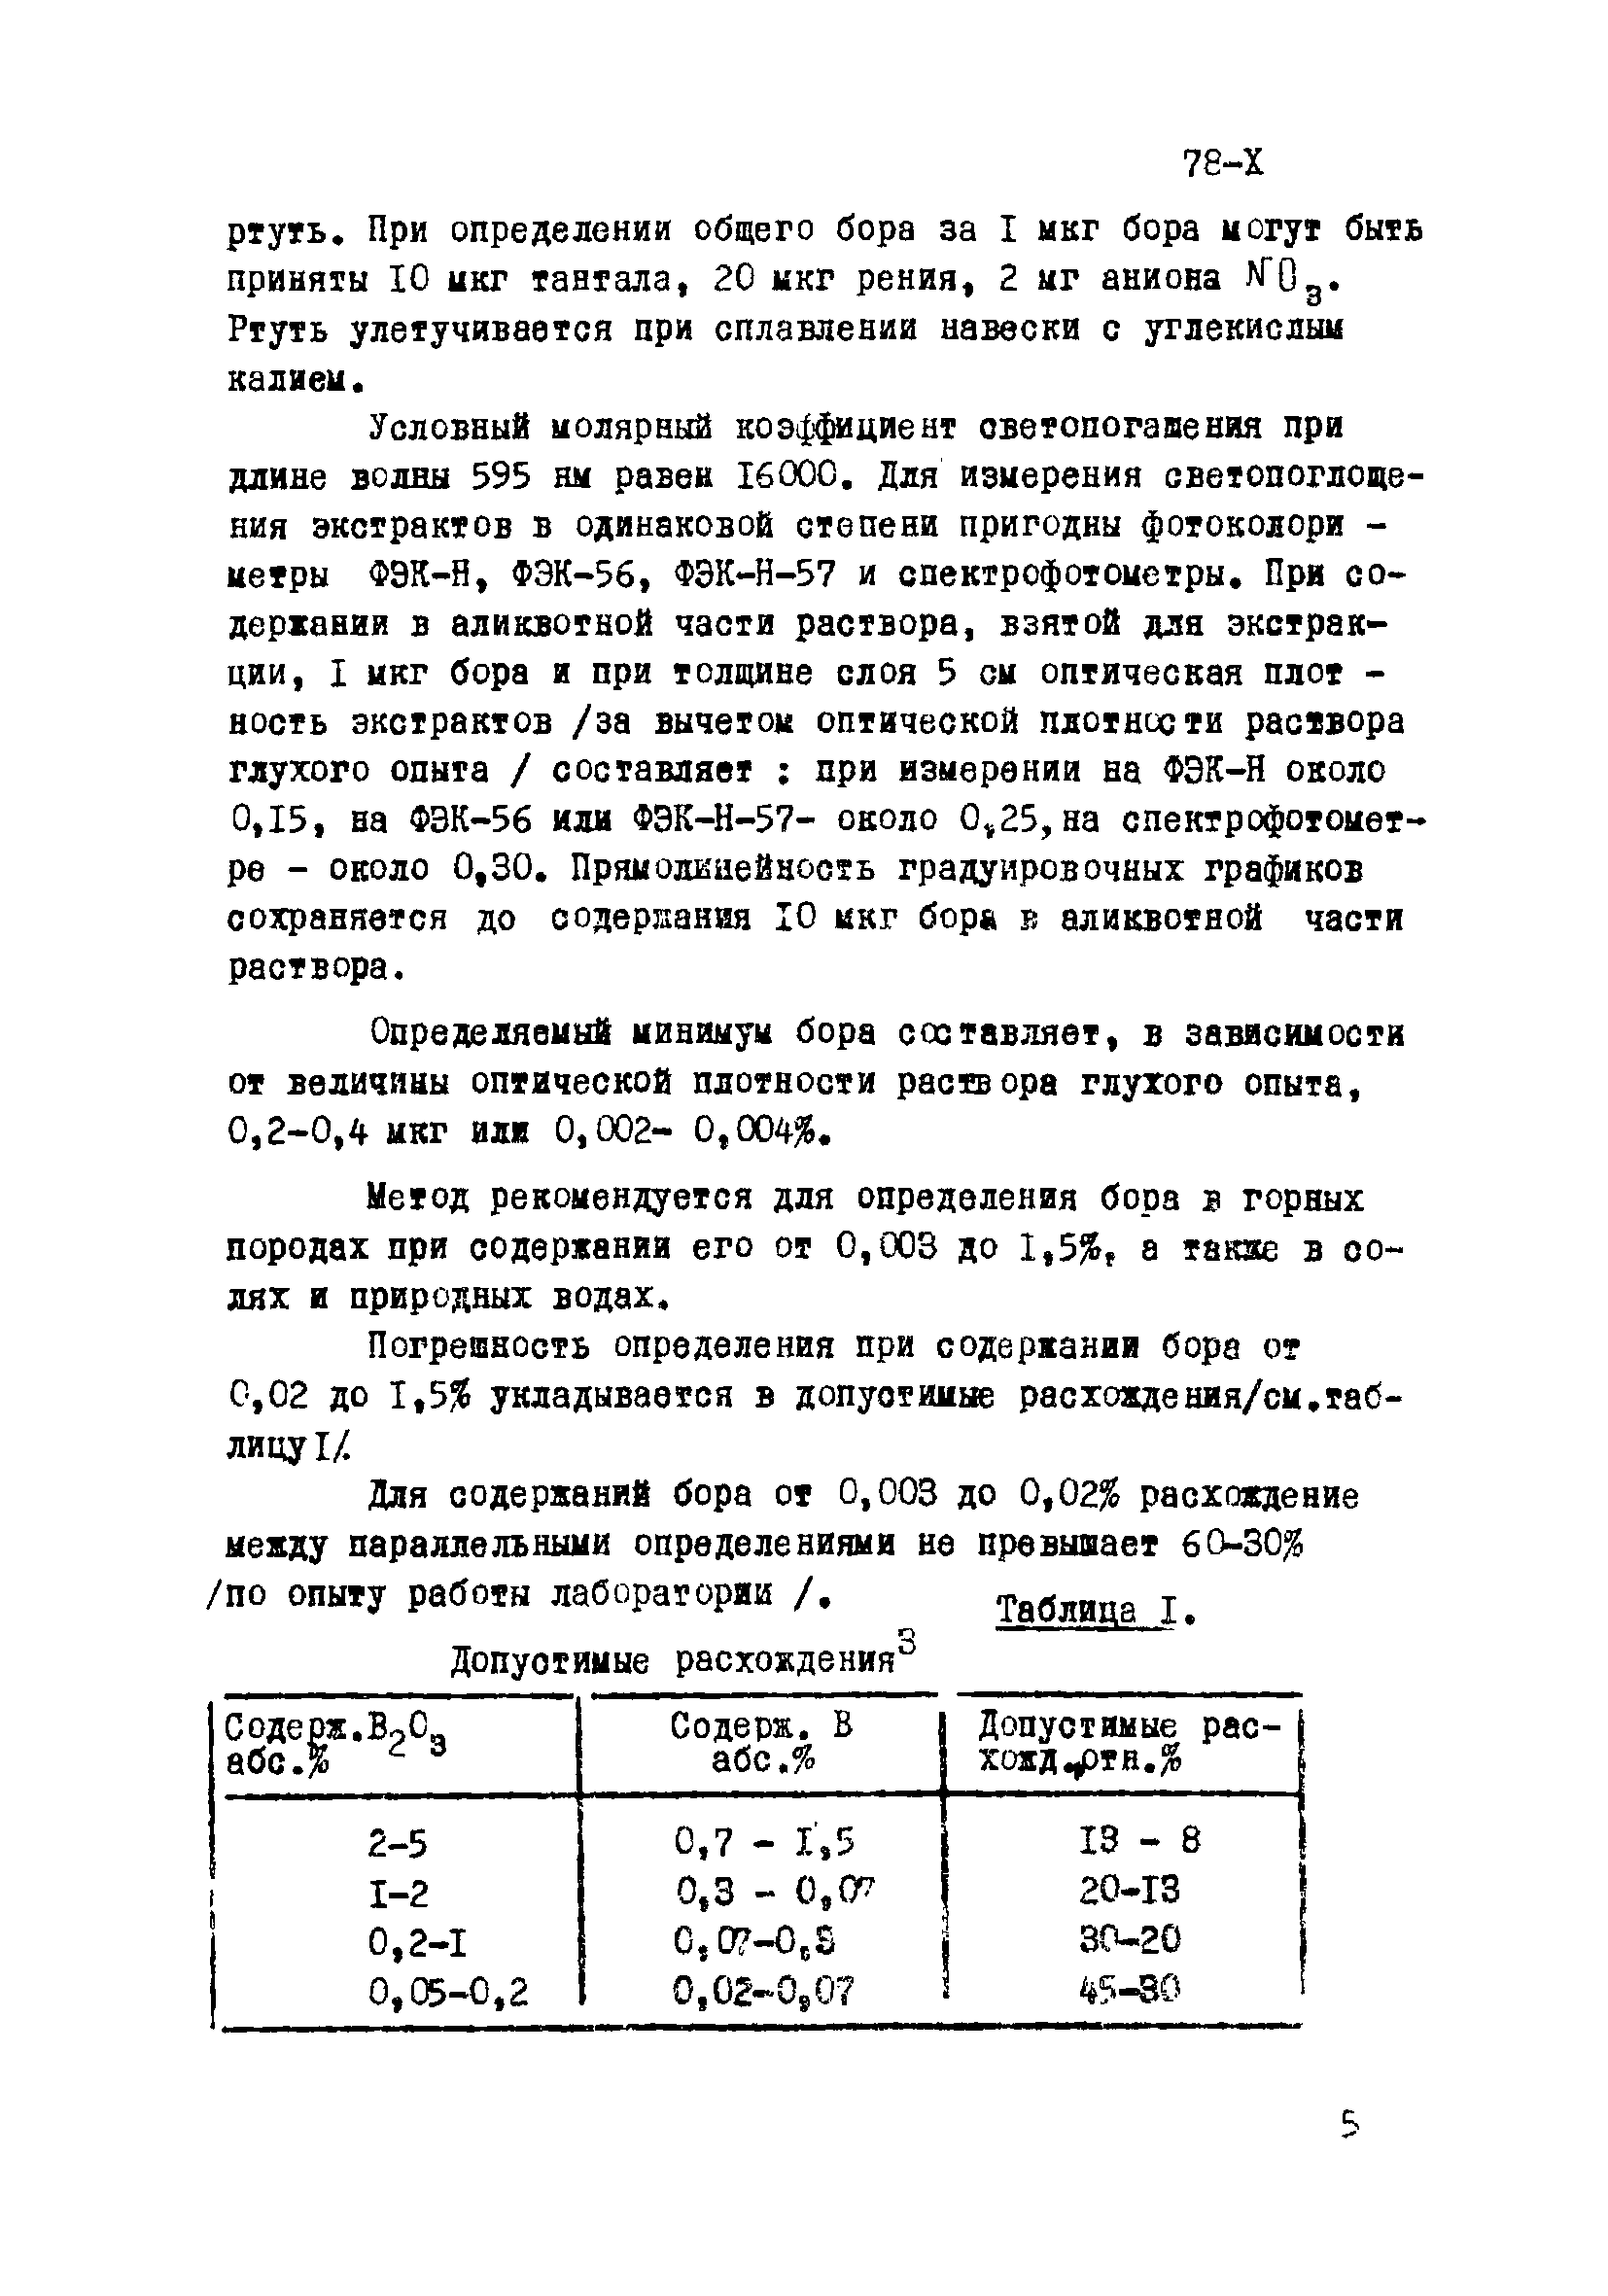 Инструкция НСАМ 78-Х